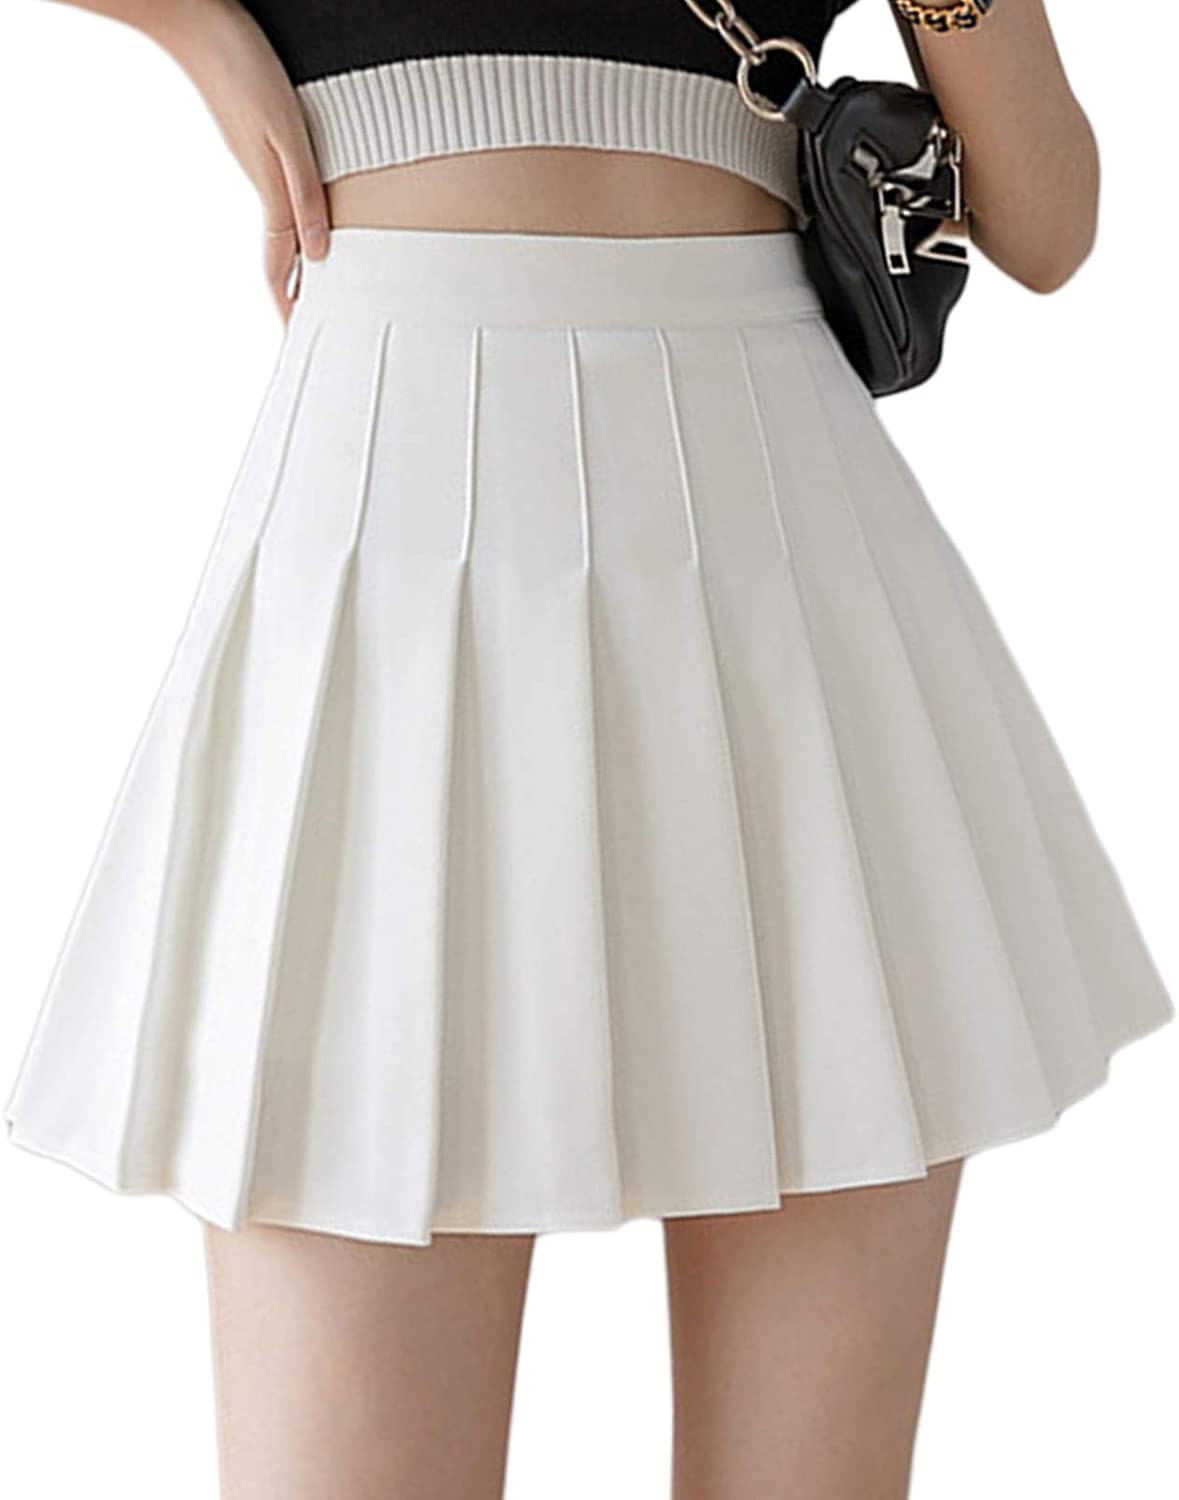 Women's Pleated Mini Skirt Skater Tennis Skirts High Waisted A Line Skorts School Girl Uniform with Shorts